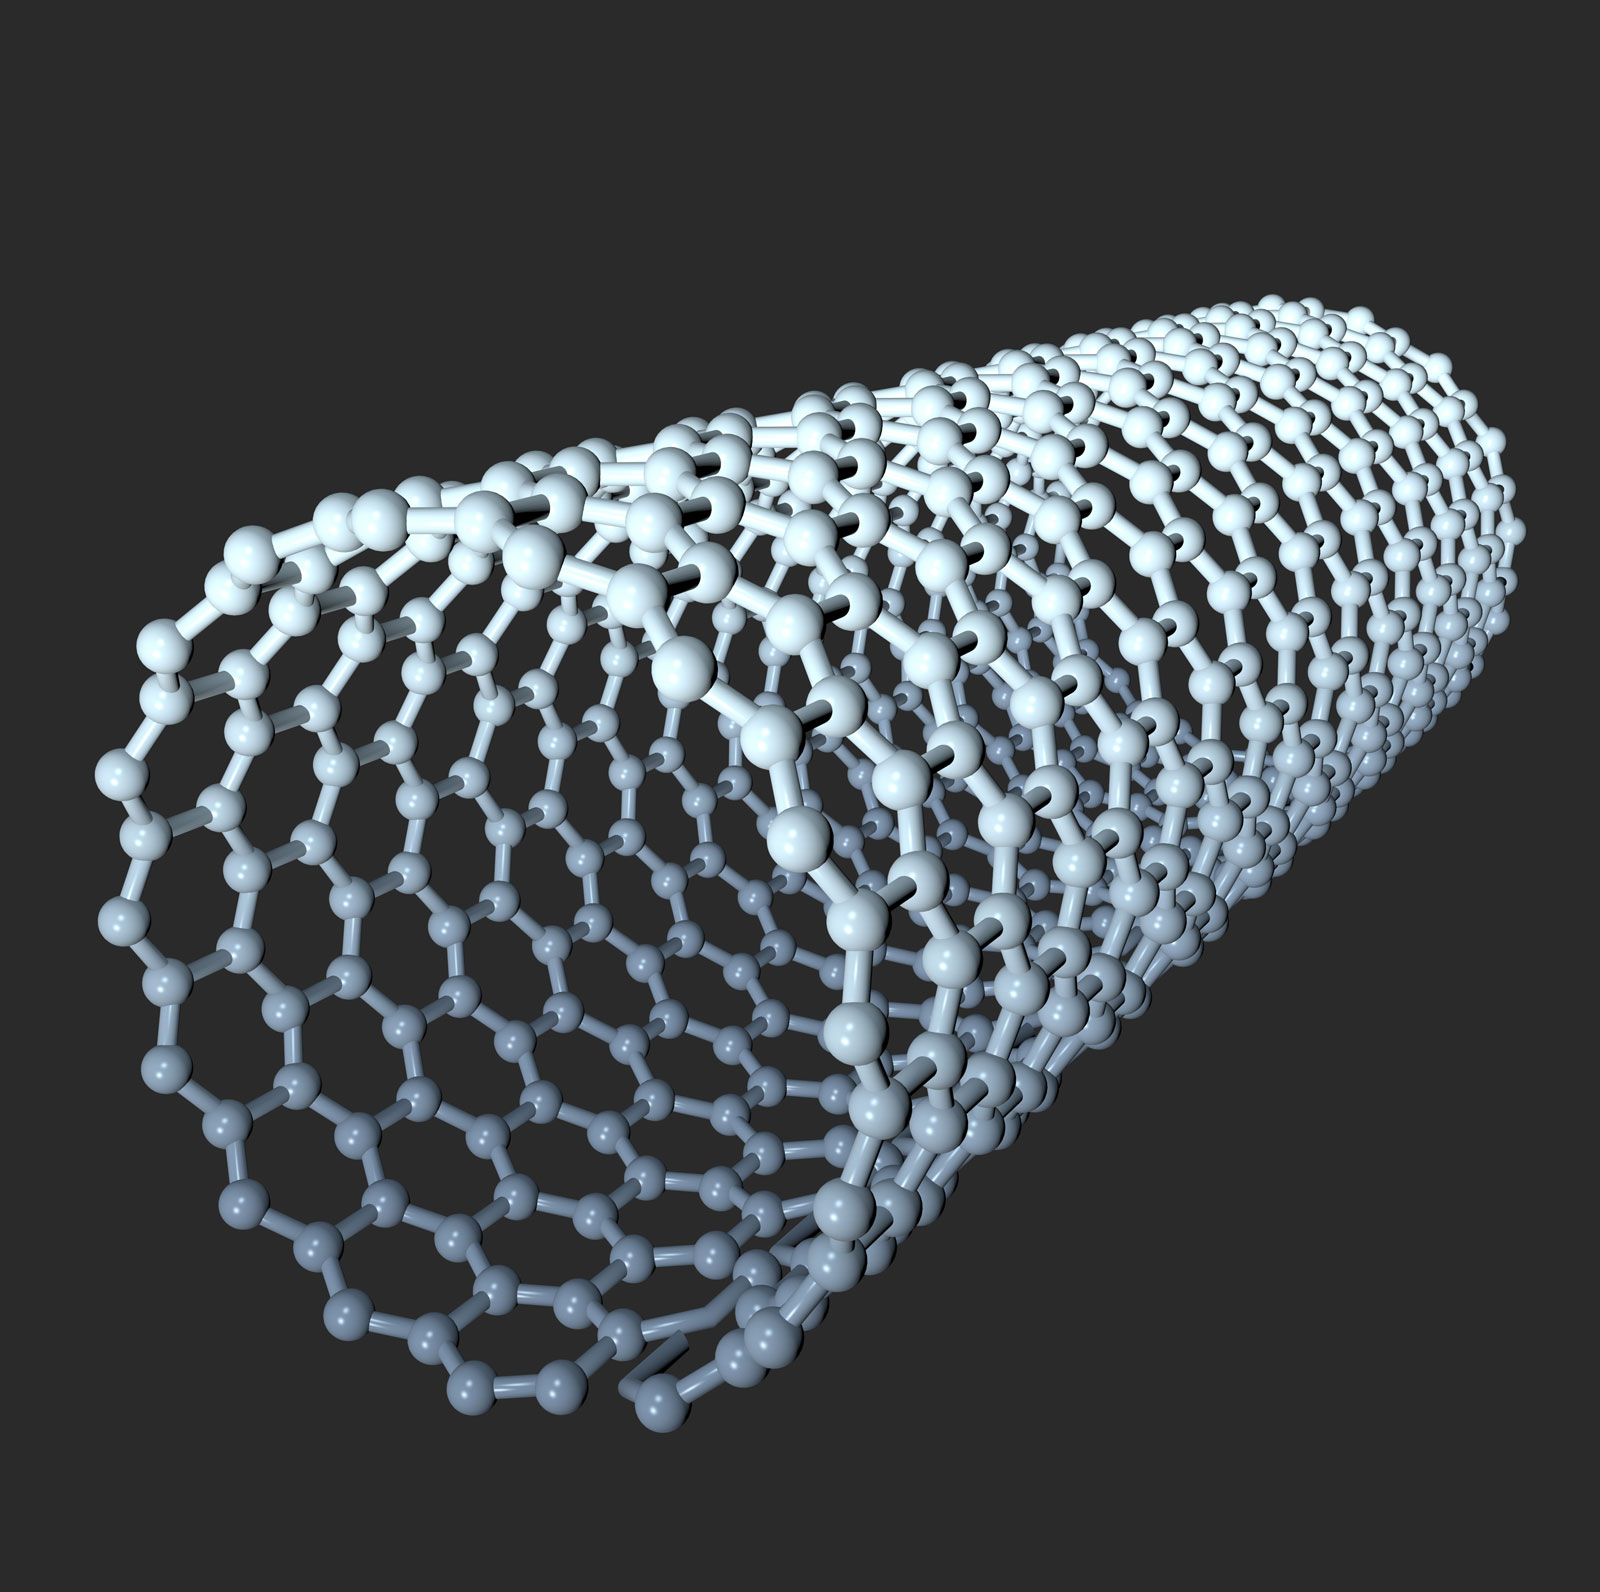 Carbon Nanotubes Also Refer to Multi-Wall Carbon Nanotubes